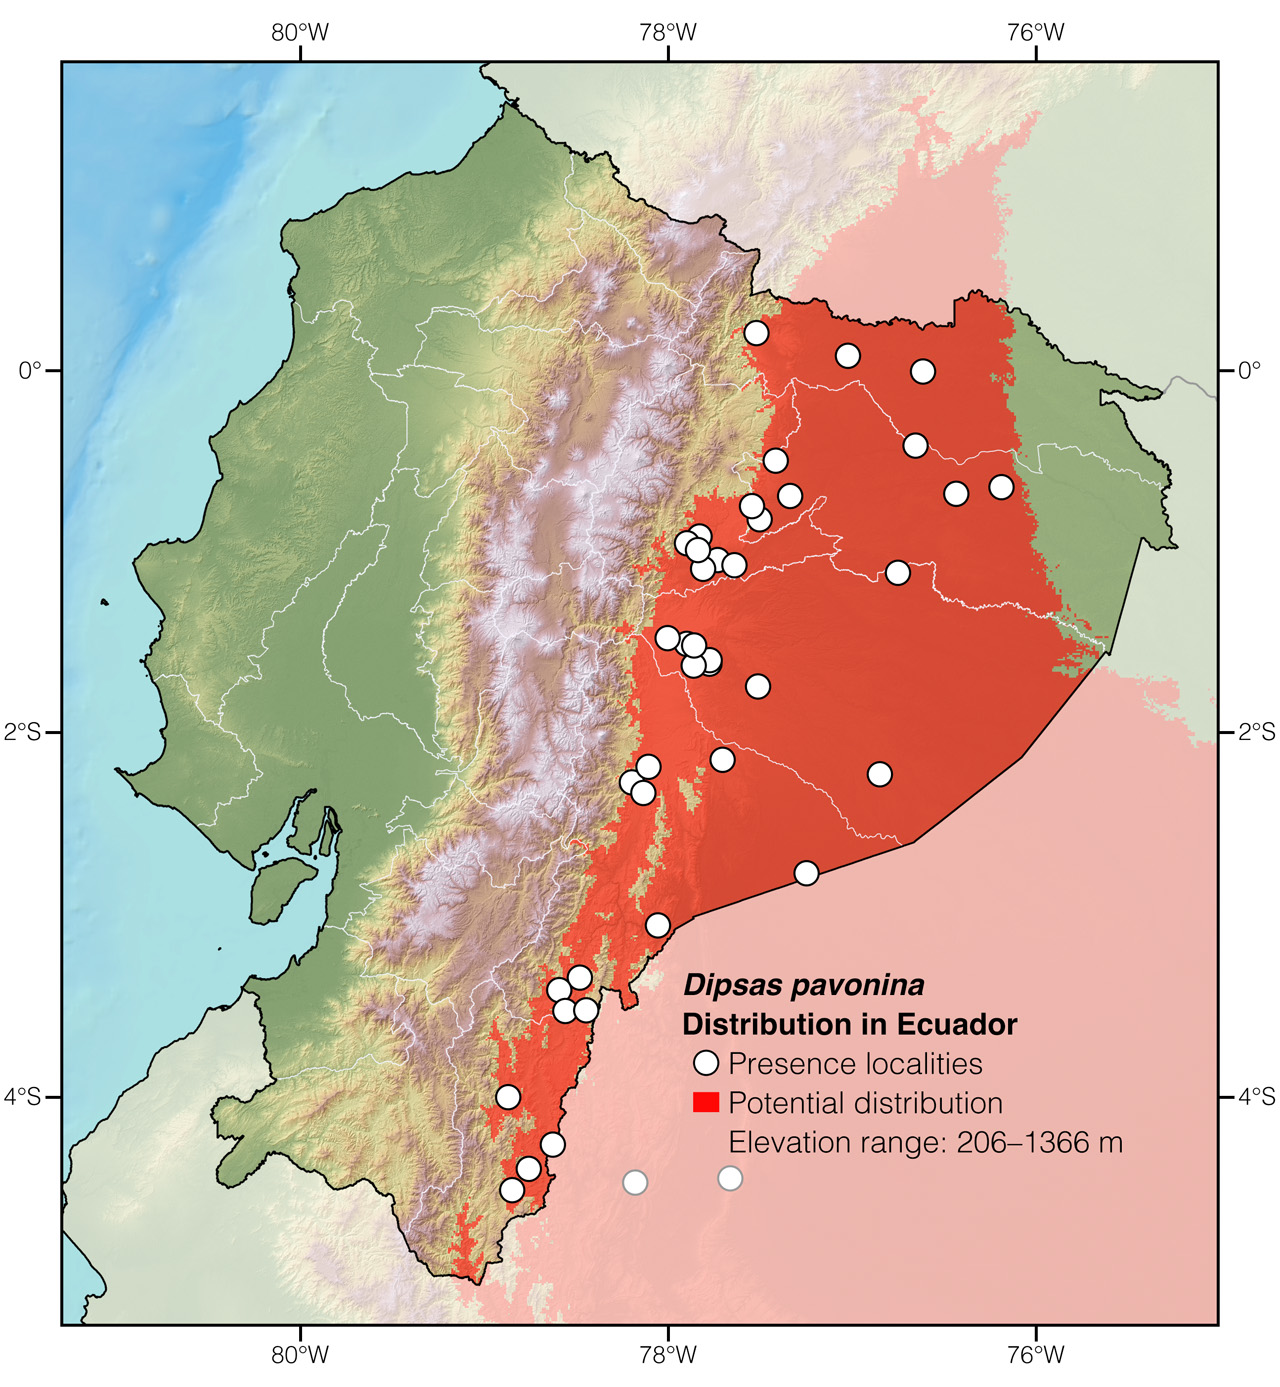 Distribution of Dipsas pavonina in Ecuador